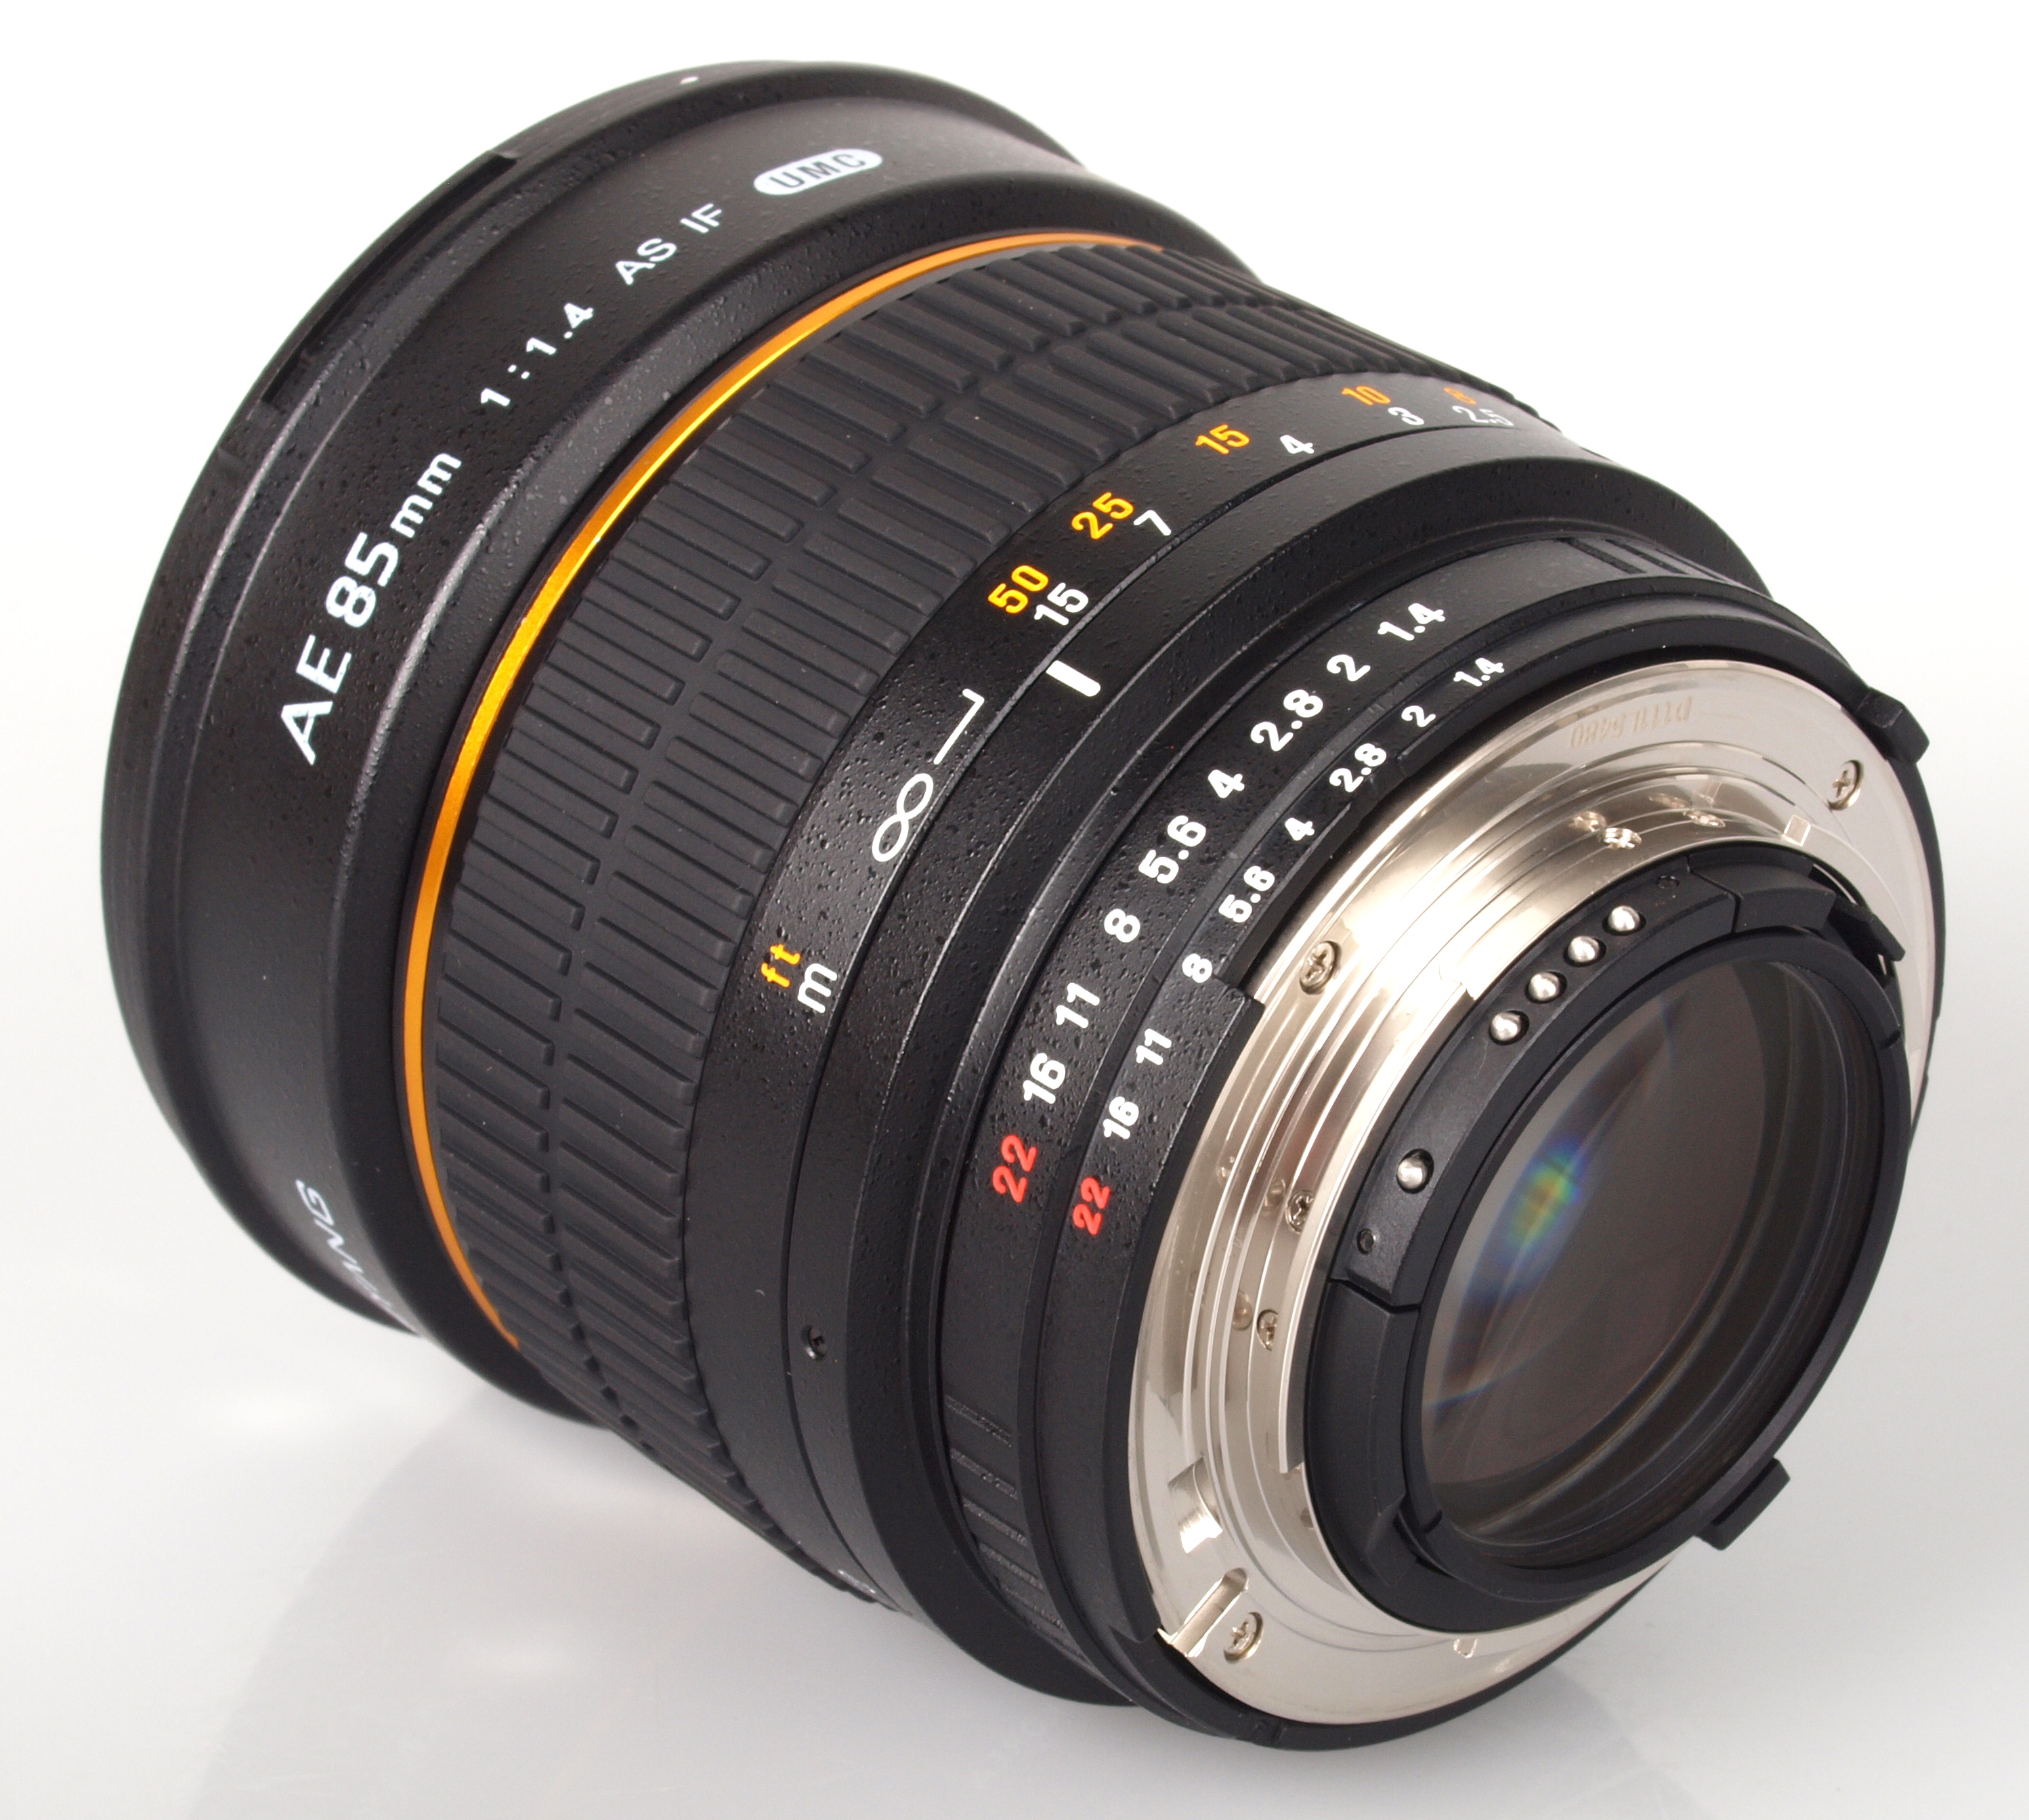 Samyang 85mm f/1.4 AS IF UMC Lens Review